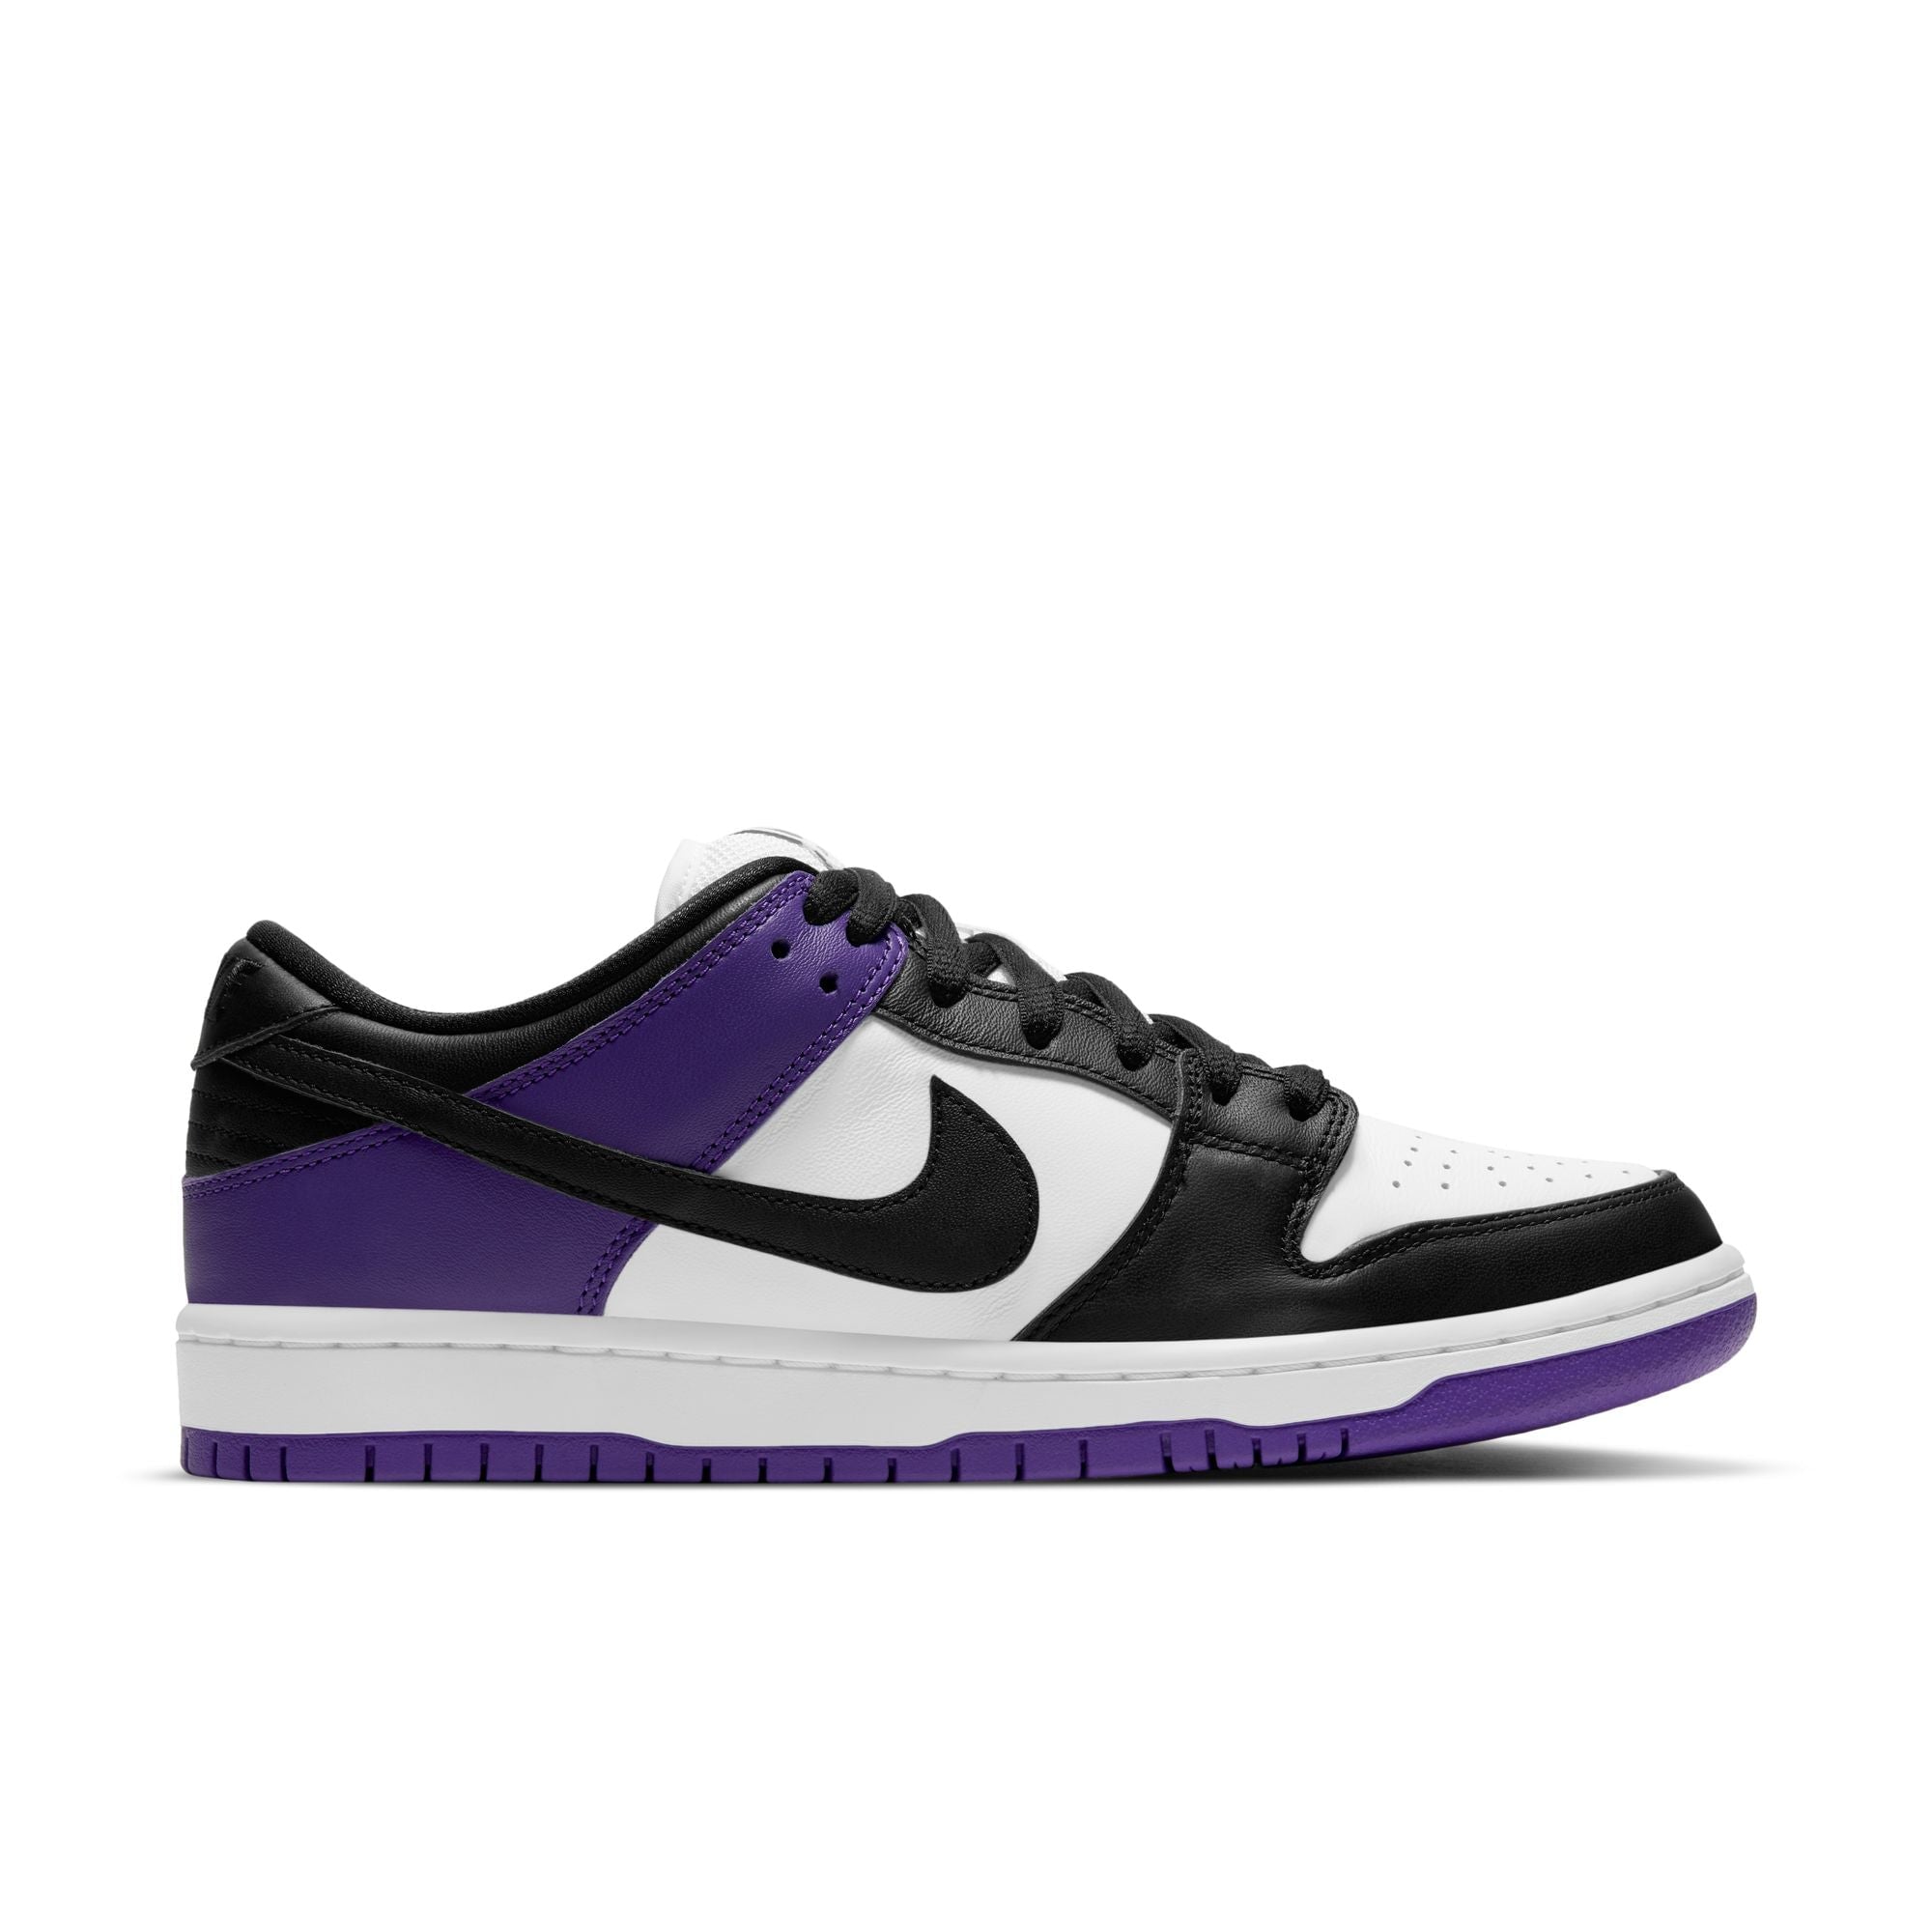 Nike SB Dunk Low "Court Purple" Skate Schuhe Herren Sneaker Nike Skateboarding 